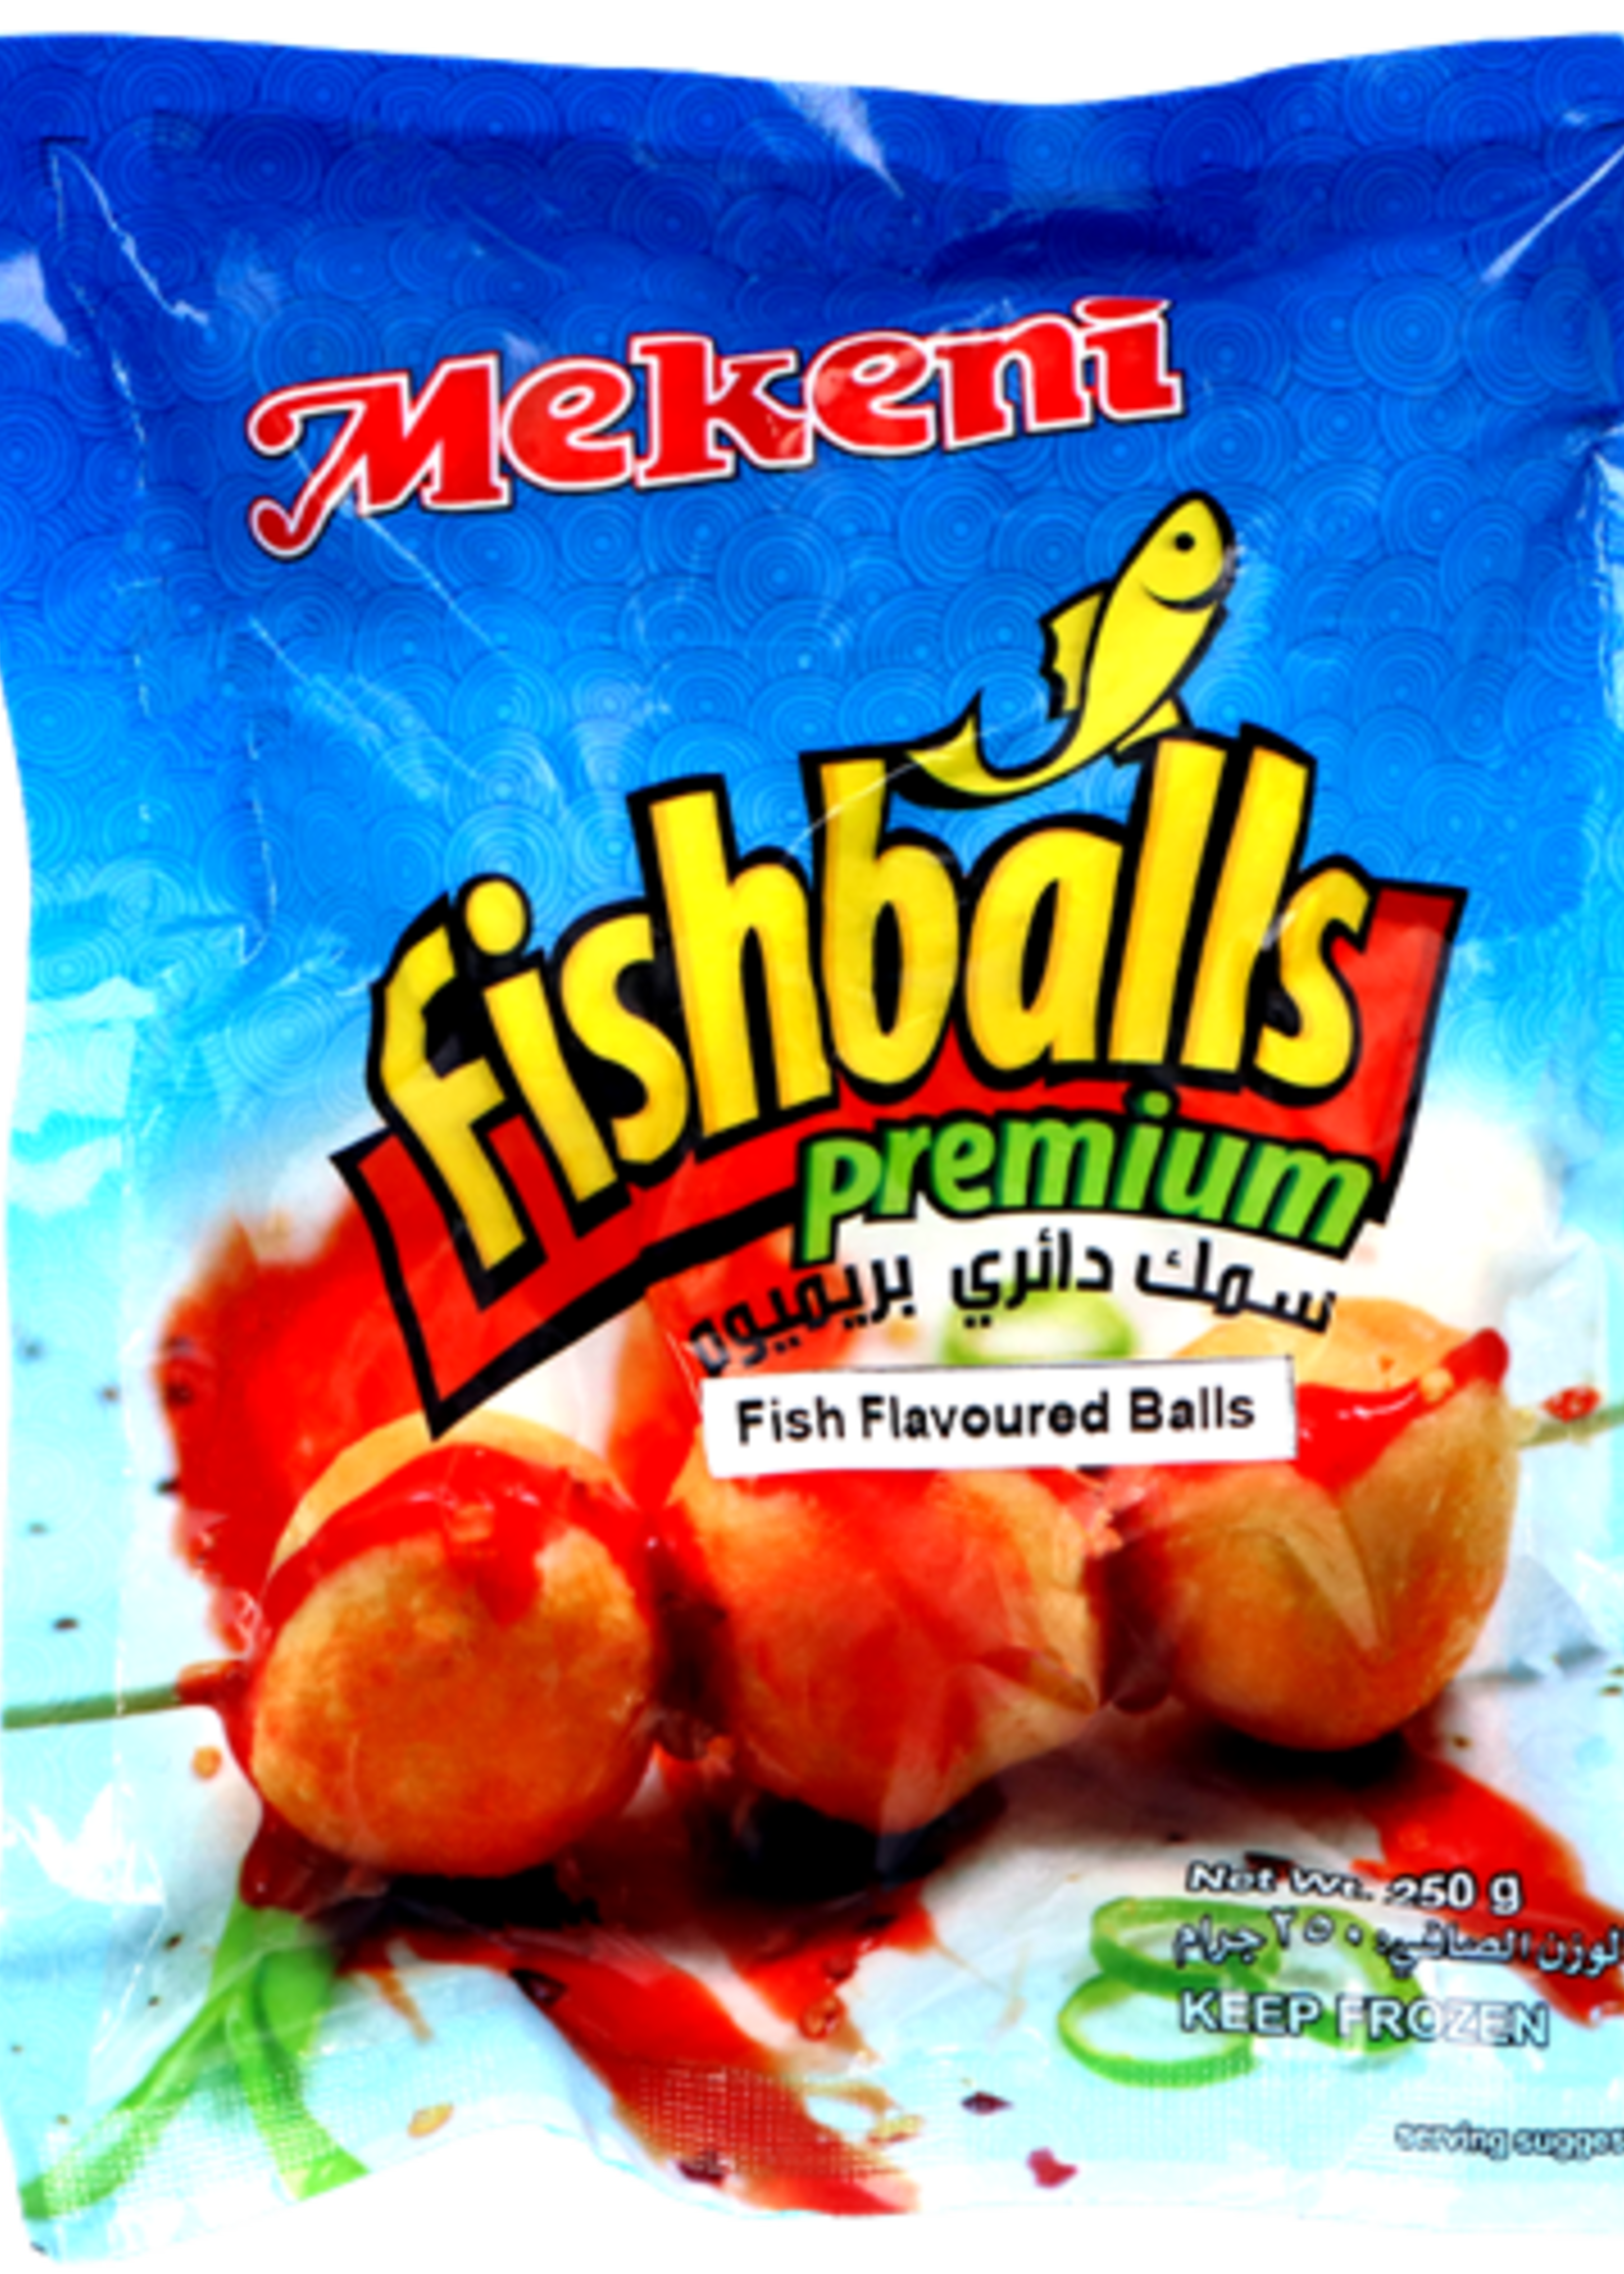 Mekeni Mekeni Fishballs Premium 250g